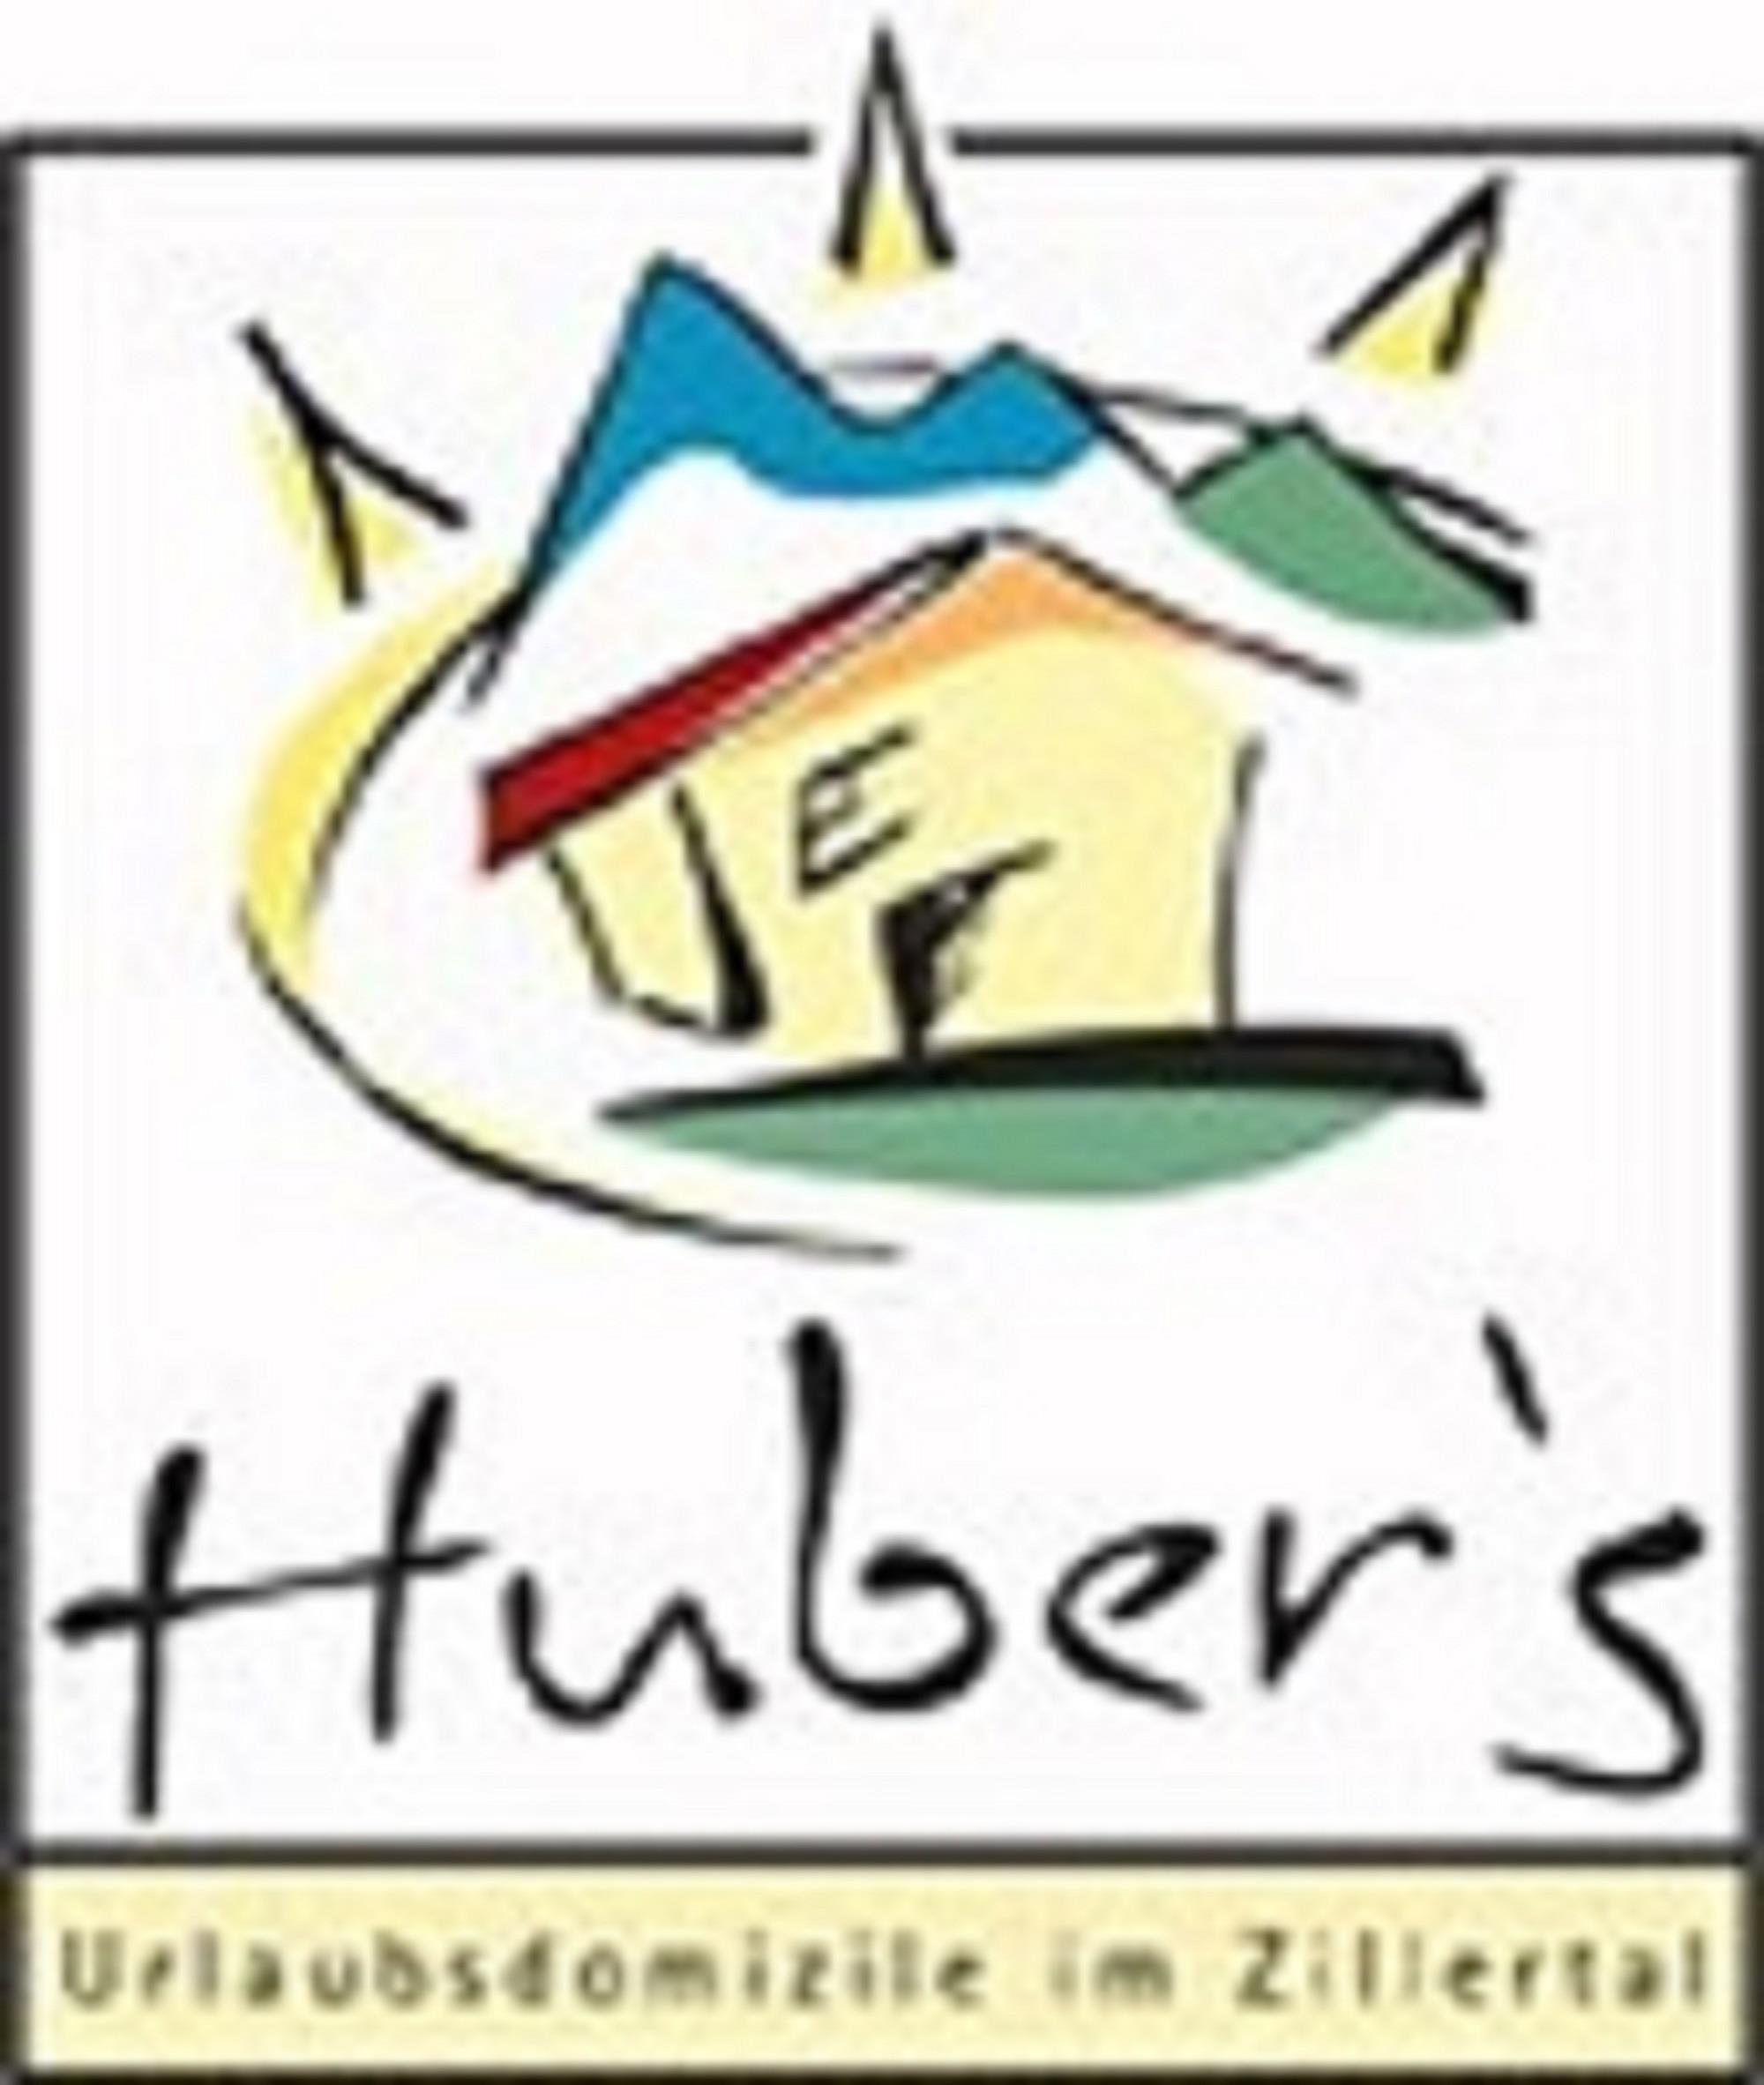 Hubers Chalet